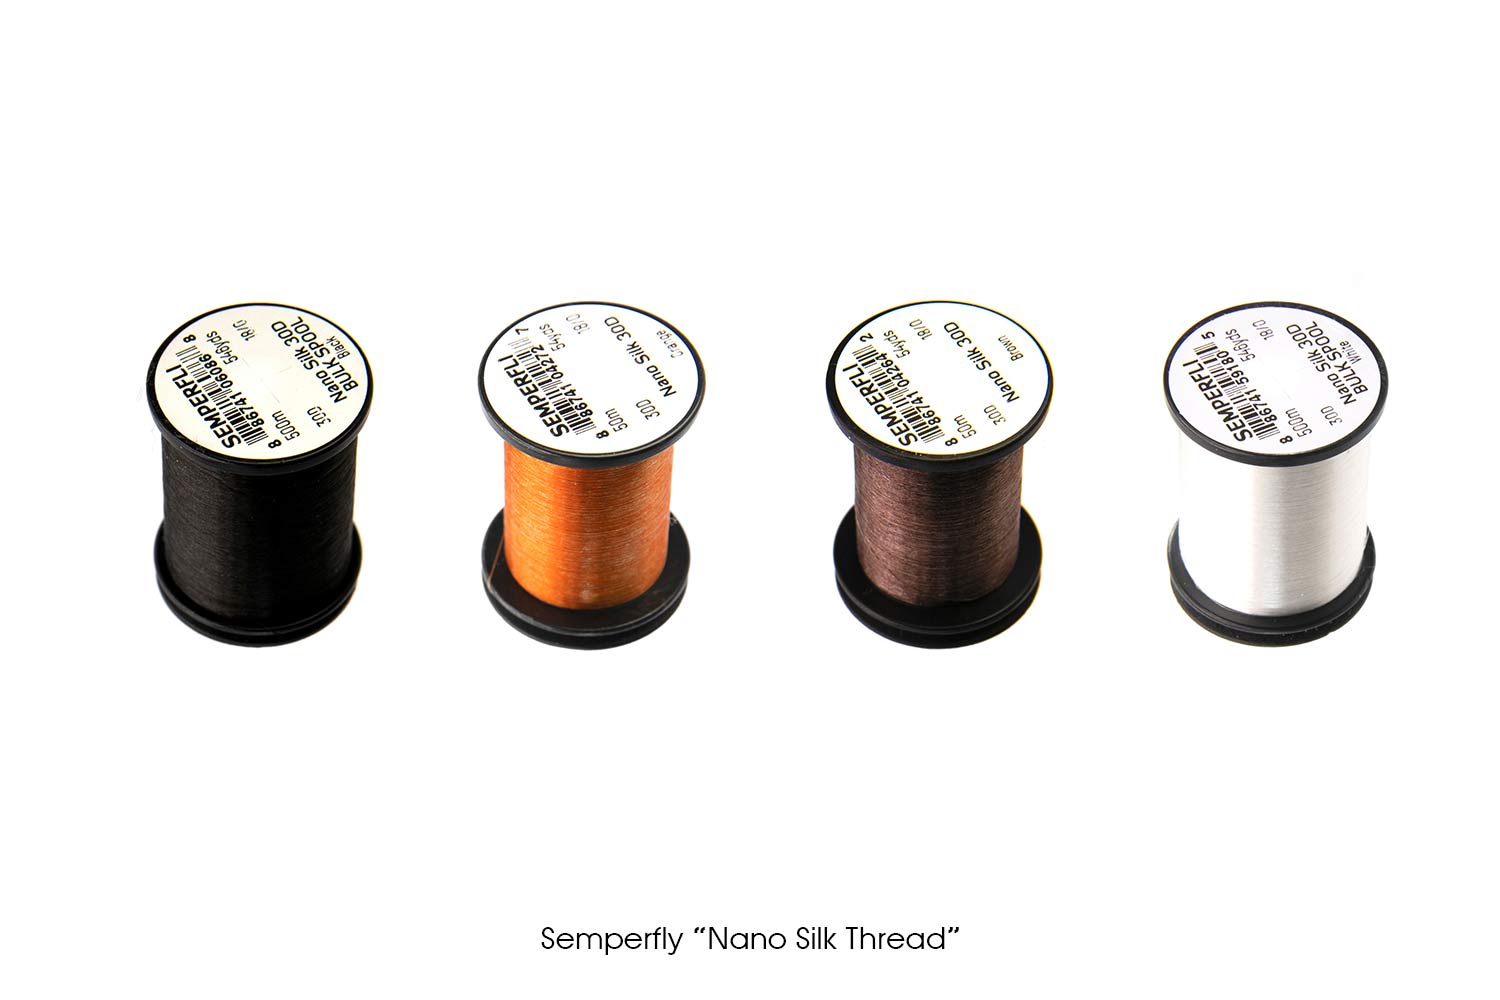 Semperfli "Nano Silk Thread"